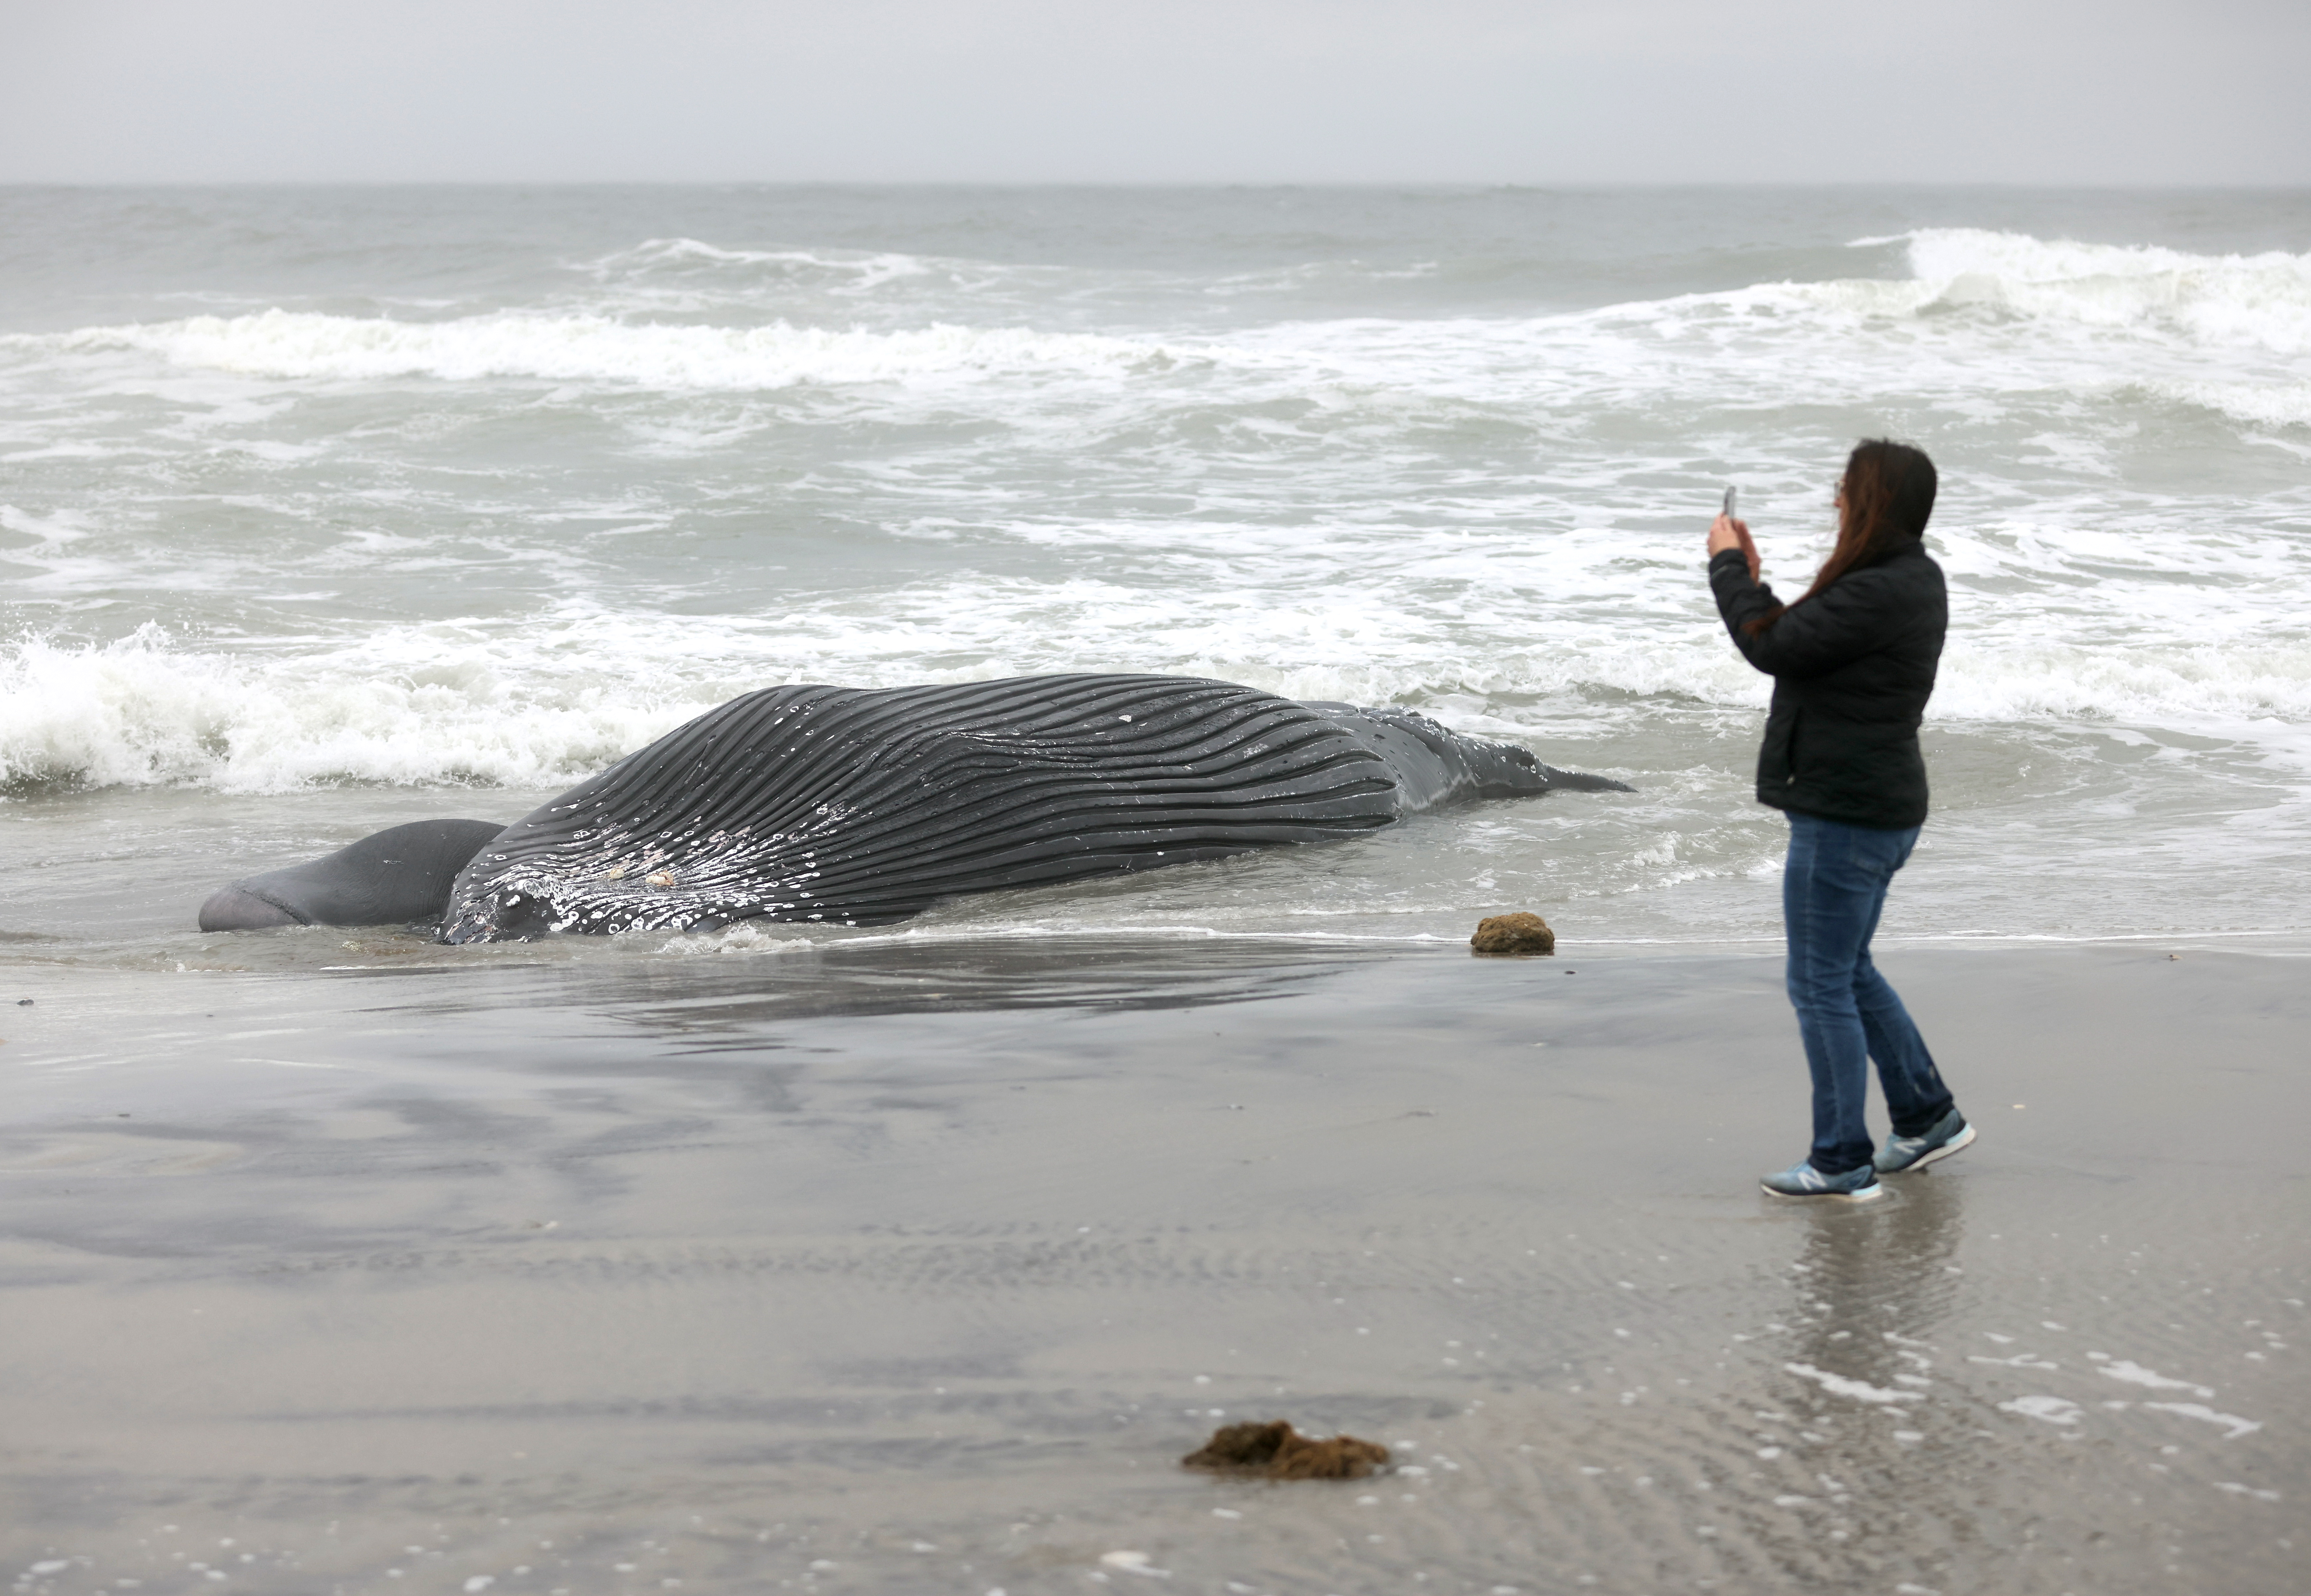 Plagen Neem de telefoon op Aggregaat 7th dead whale washes up at Jersey Shore. Calls to stop offshore wind work  grow. - nj.com